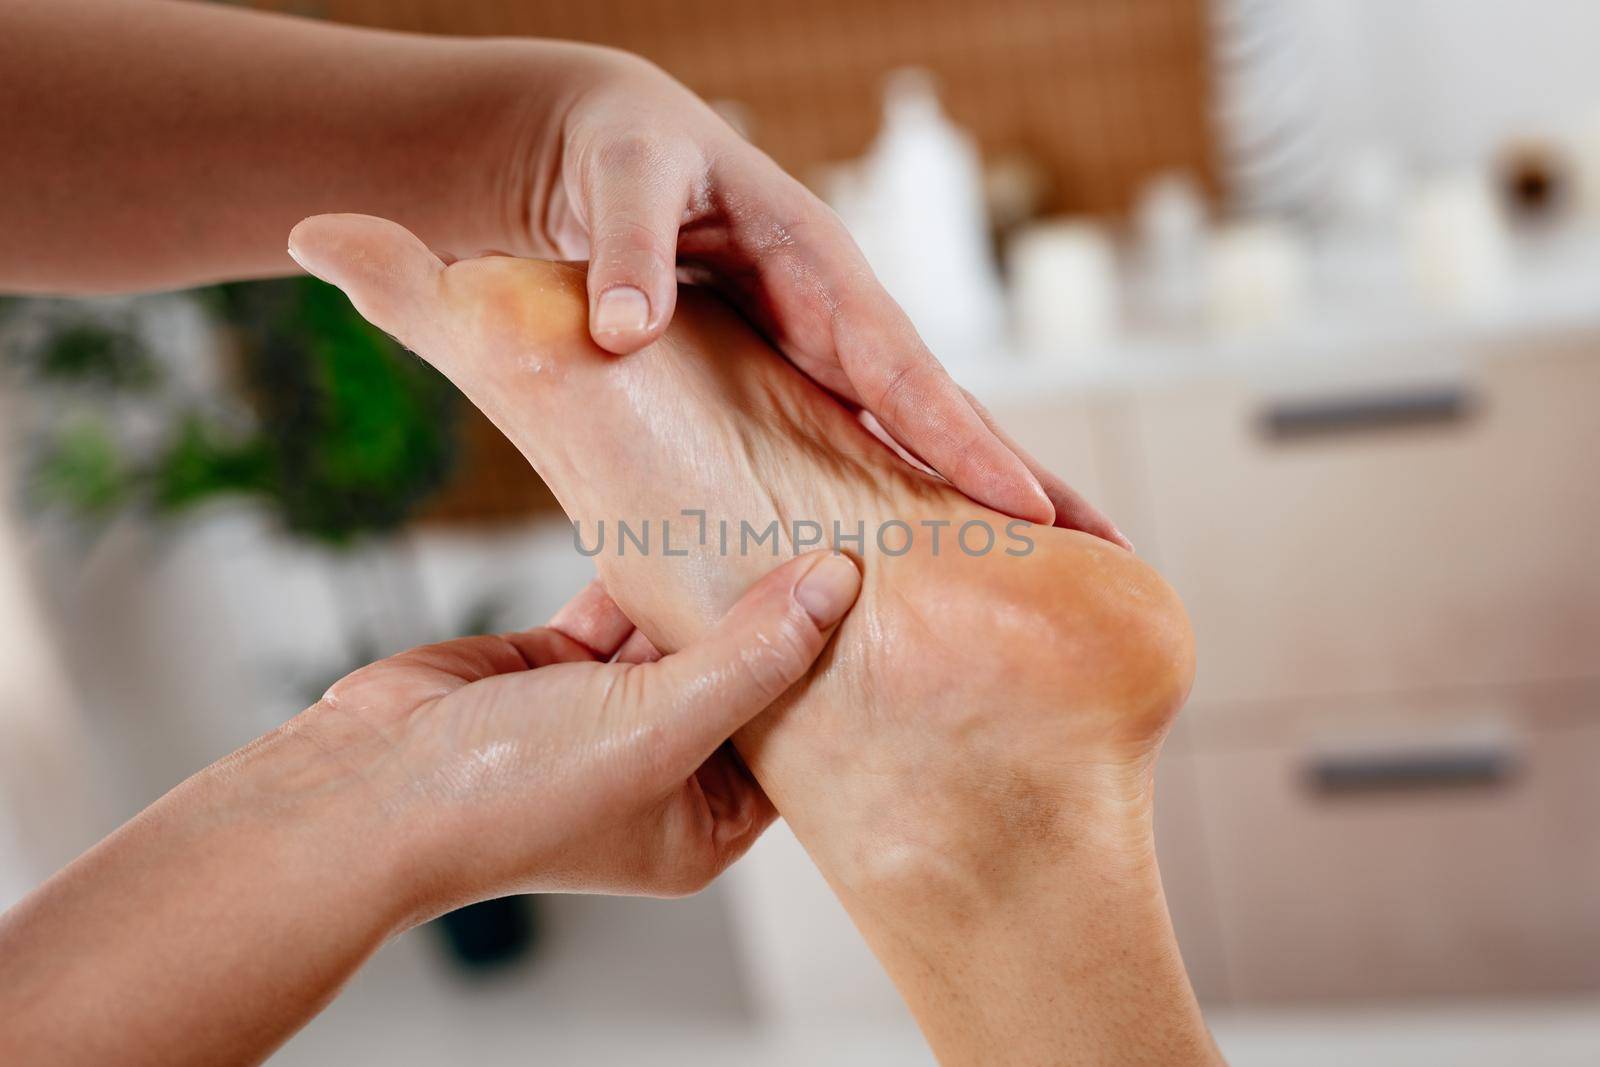 Reflexology Foot Massage by MilanMarkovic78